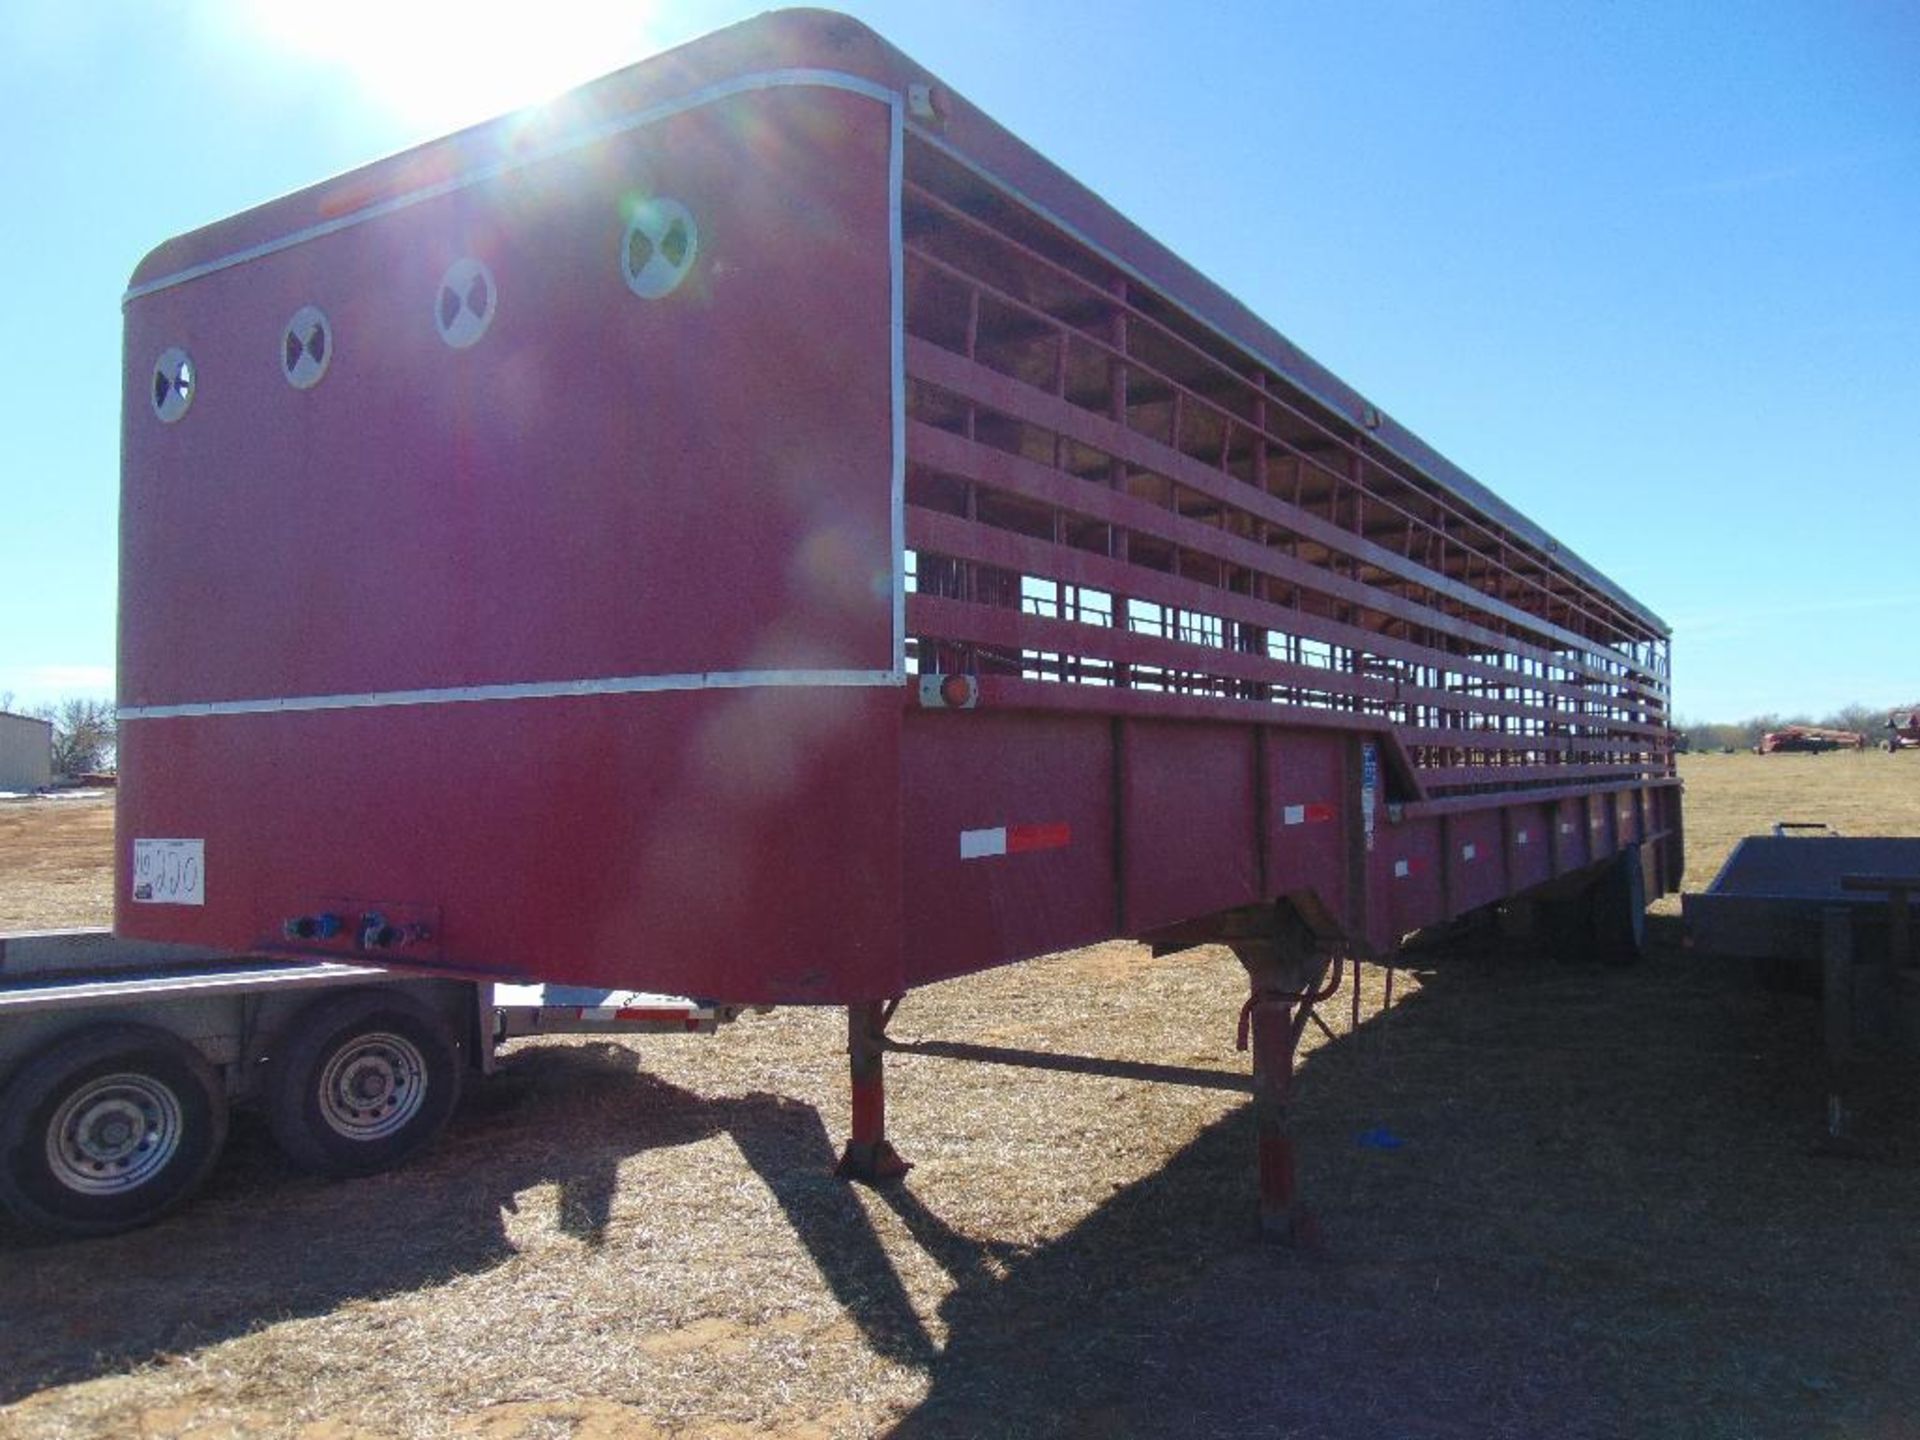 2007 Gooseneck S/A 43' Ground Load Livestock Trailer, s/n 16gs743147b060888, 3 cut gates, sliding - Image 3 of 6